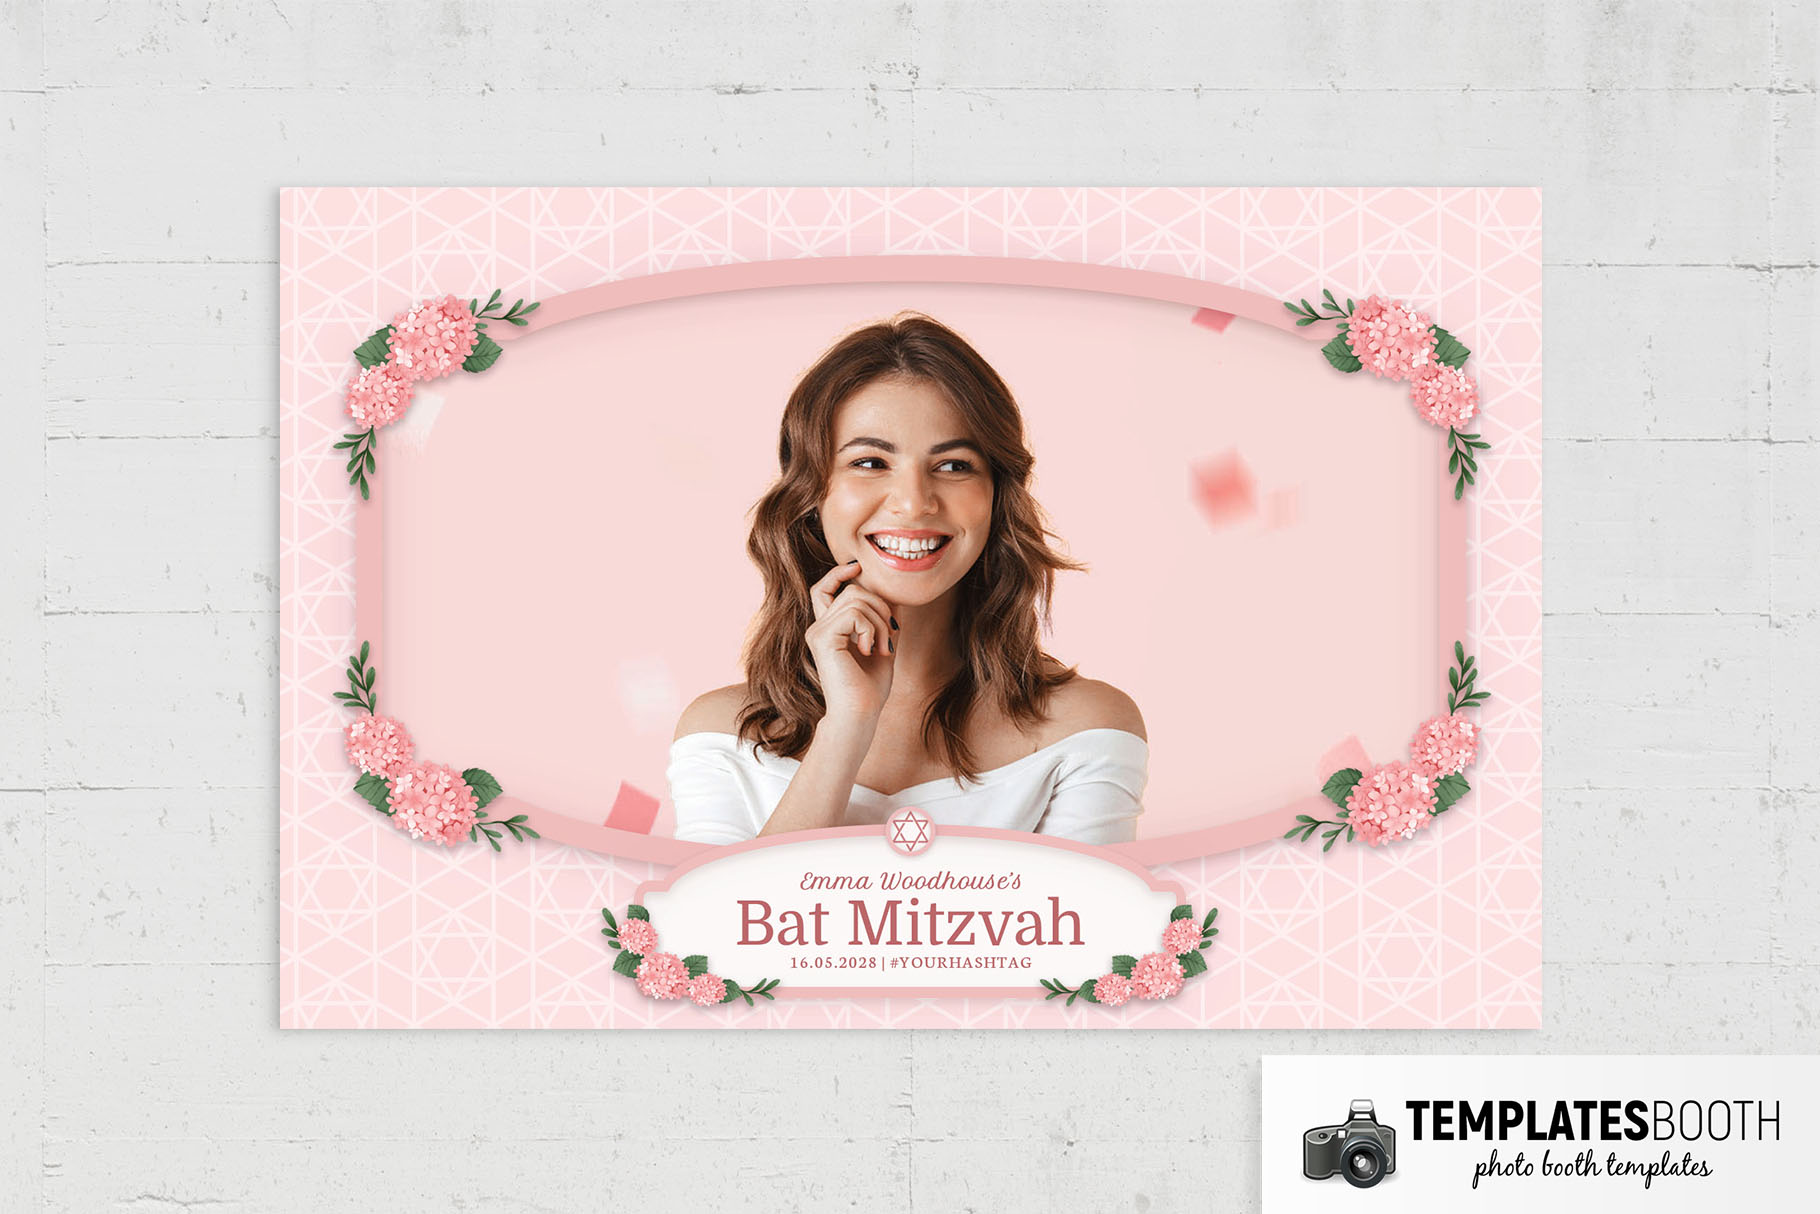 Bat Mitzvah Photo Booth Template